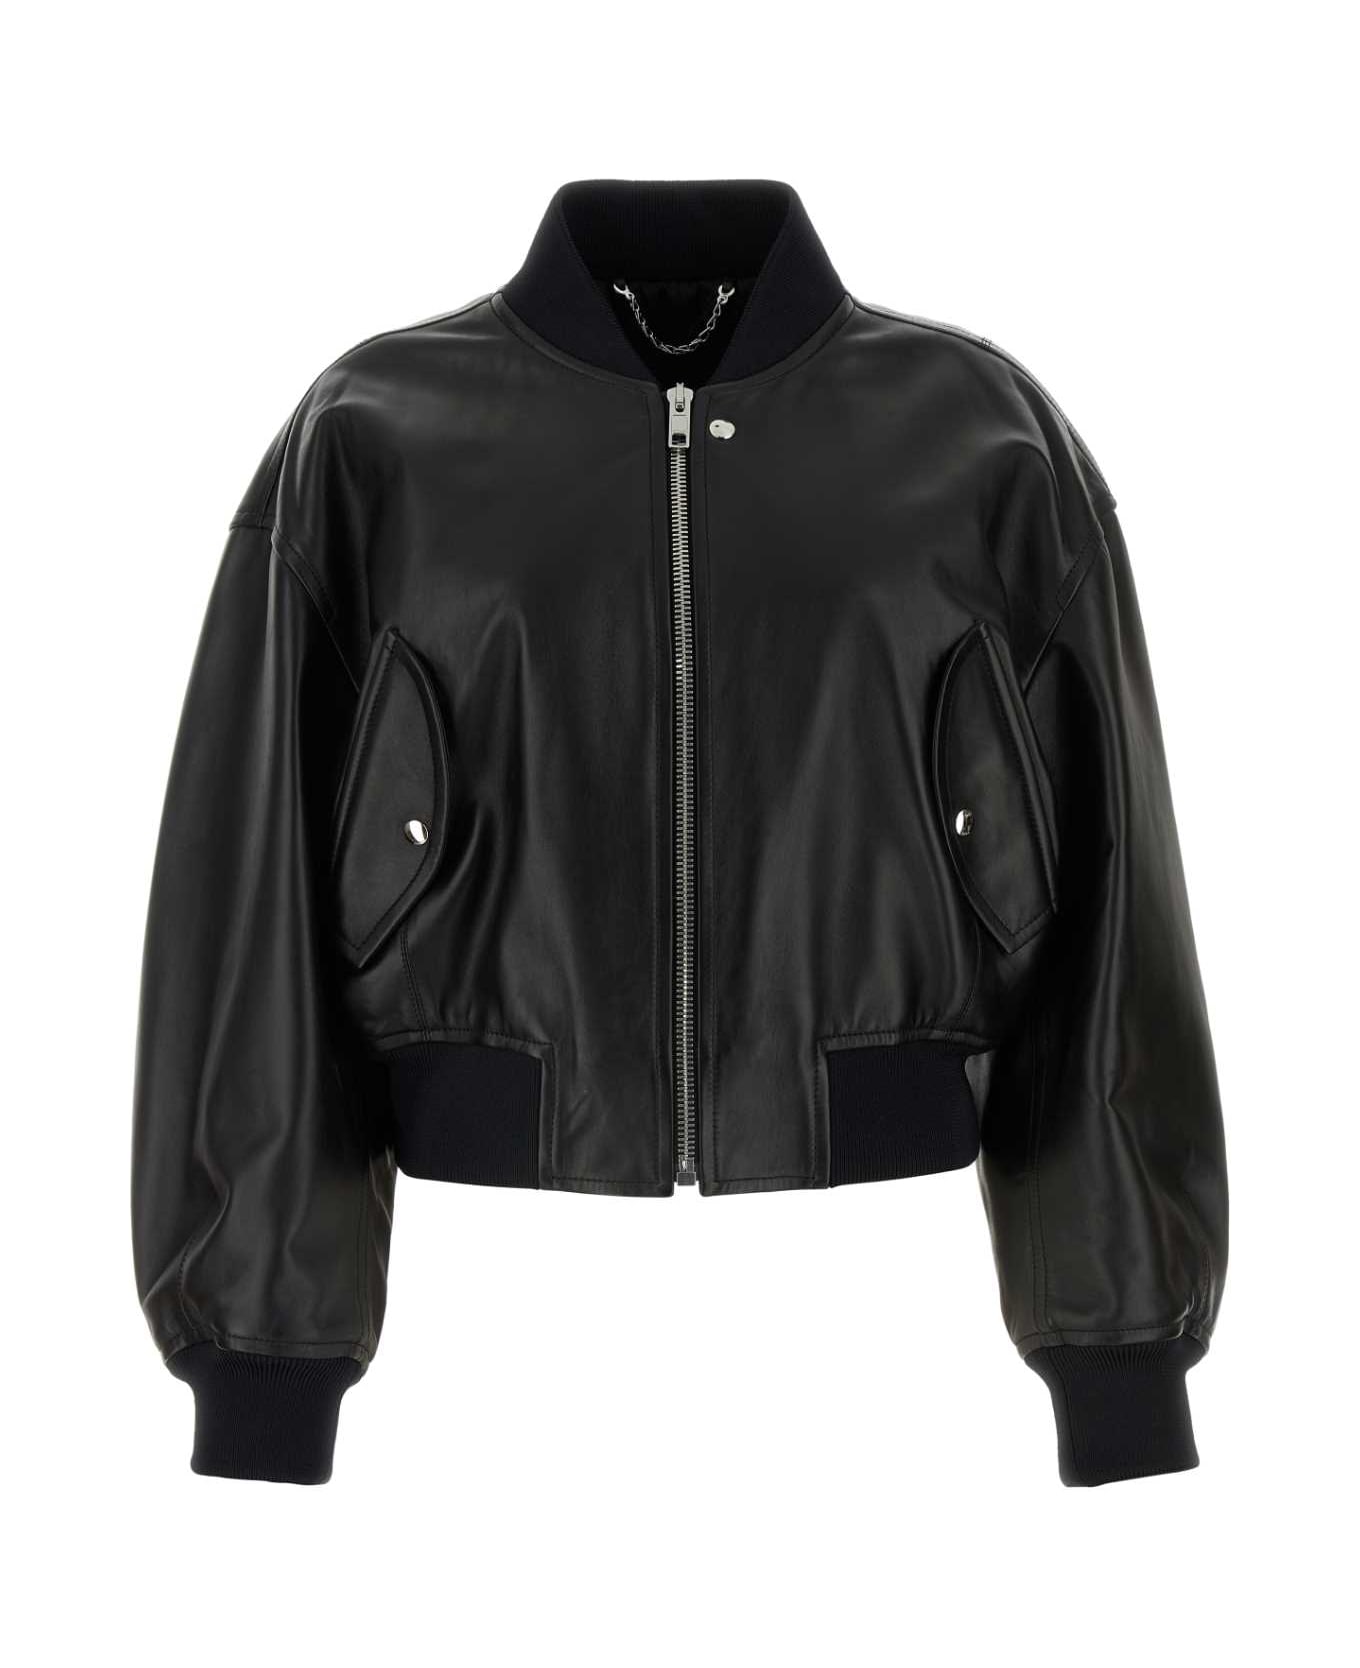 Gucci Black Leather Bomber Jacket - Black